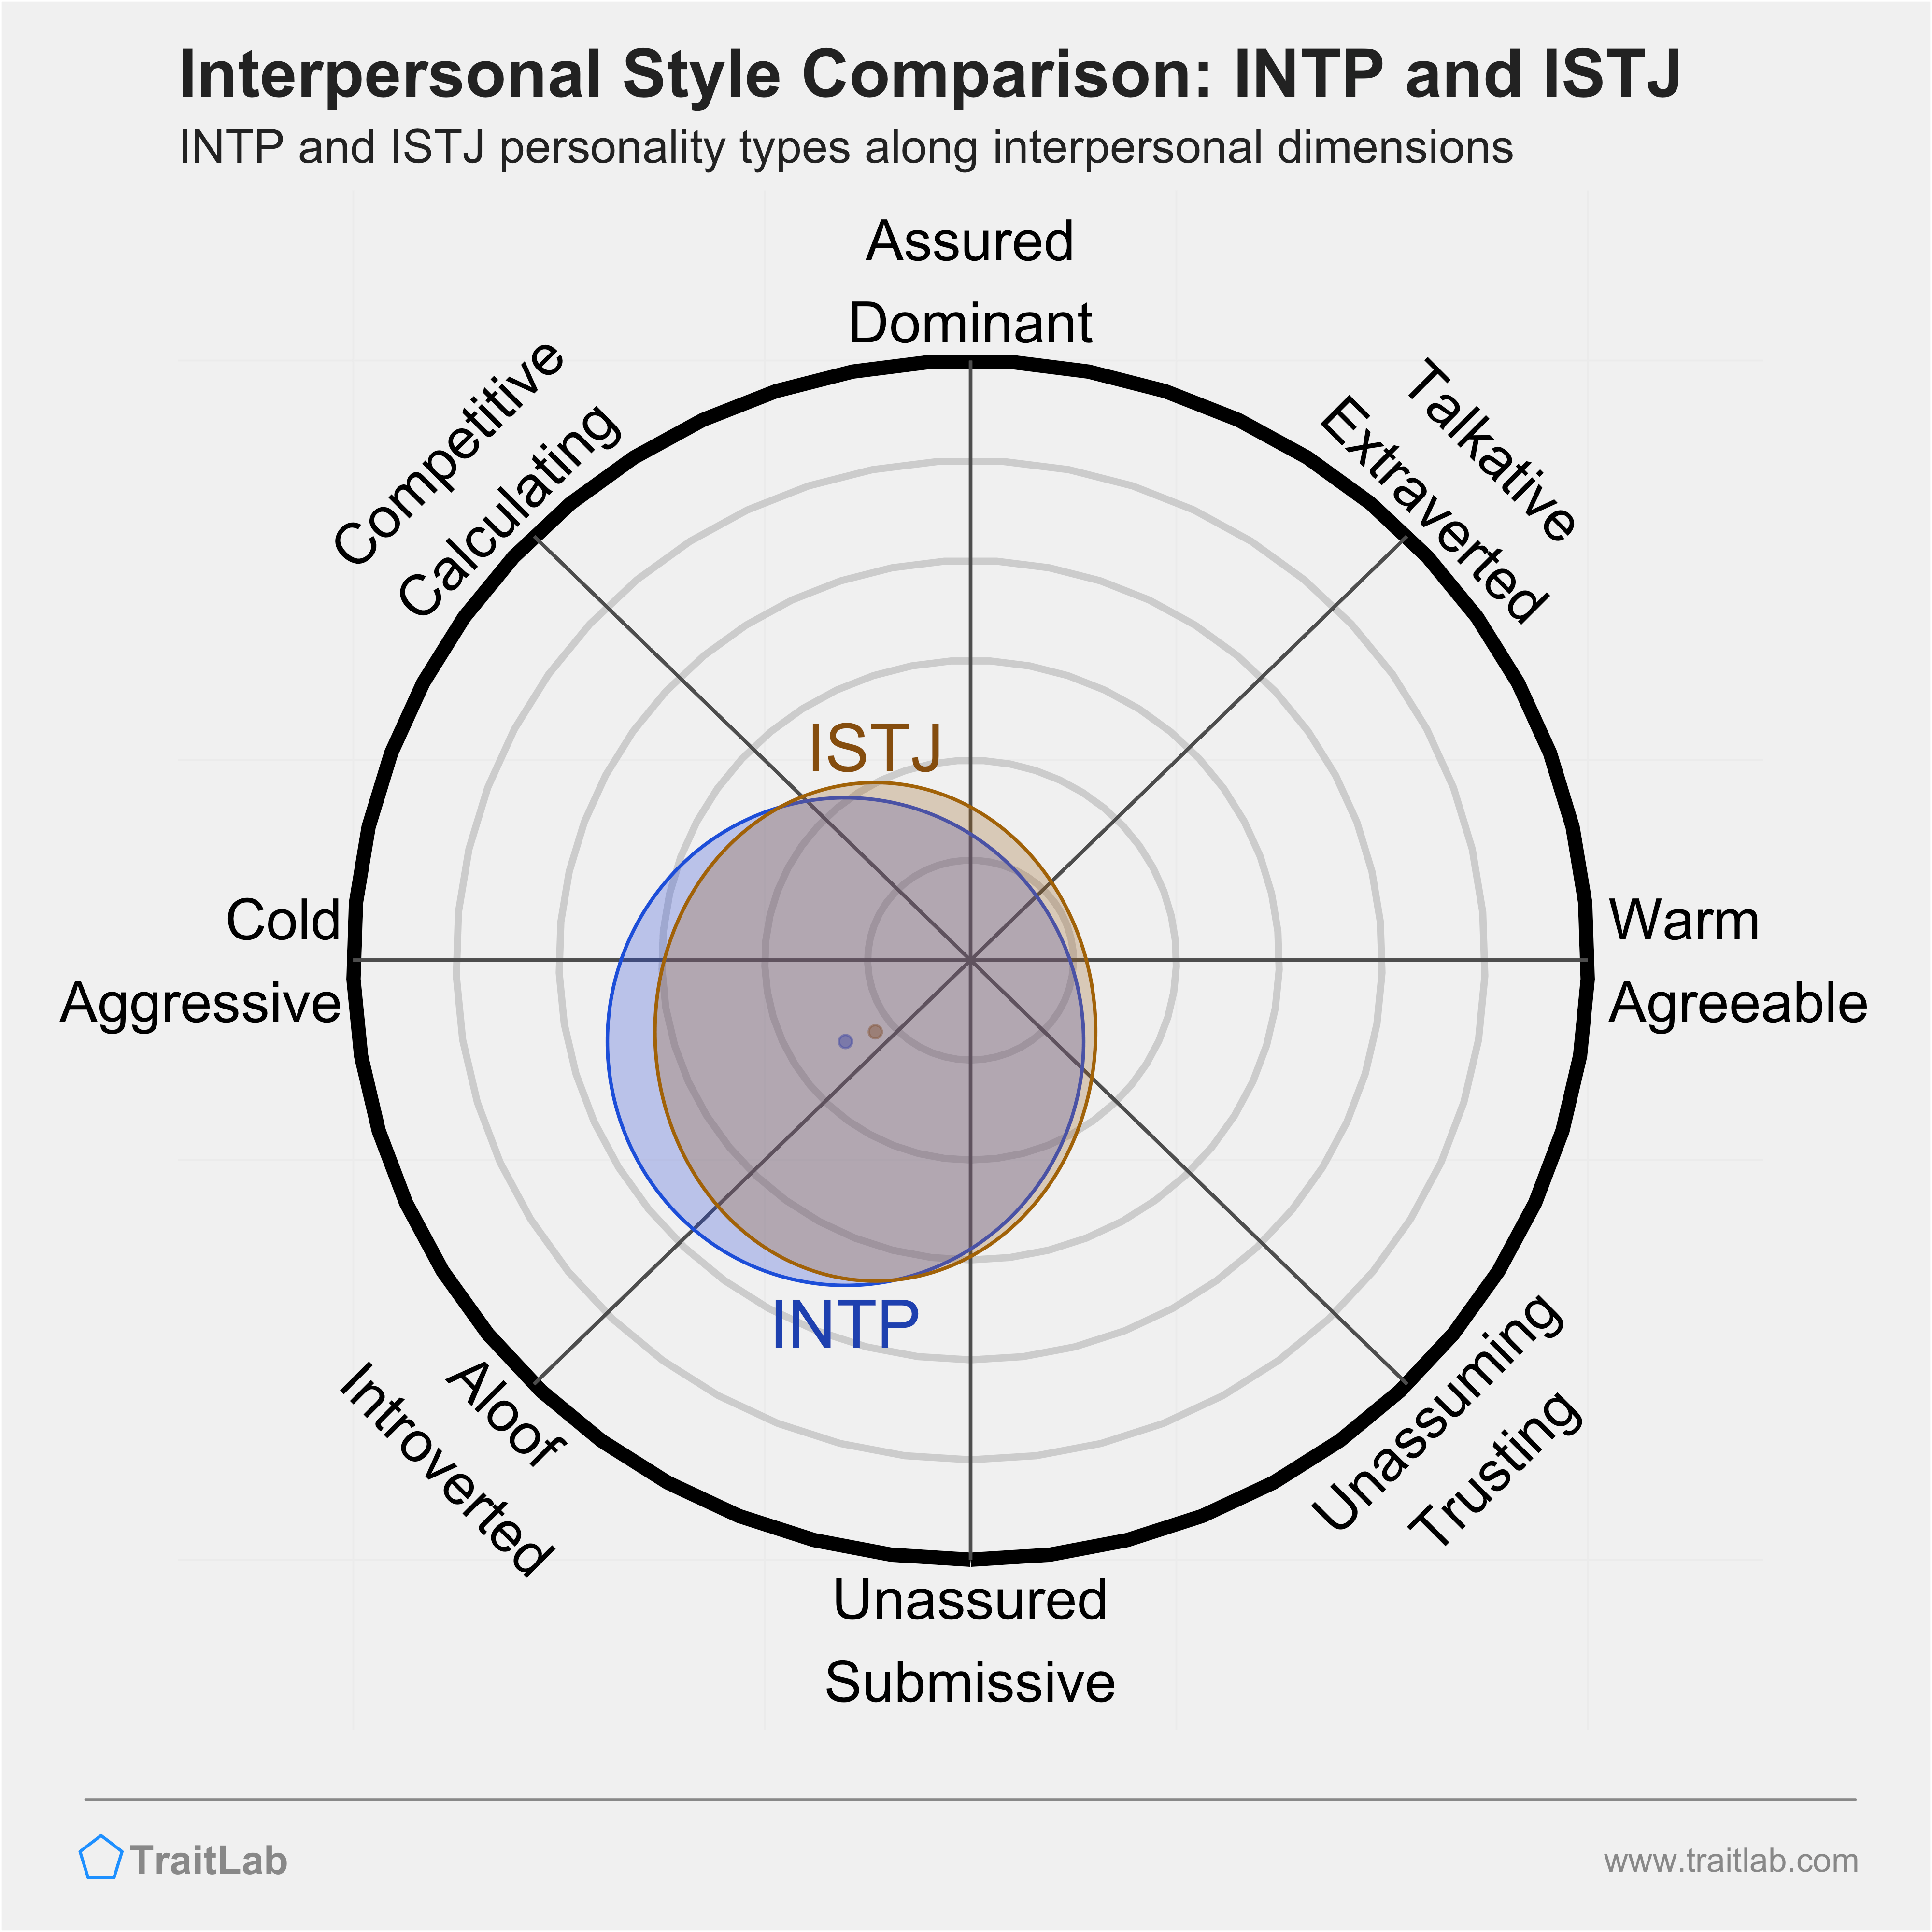 INTP and ISTJ comparison across interpersonal dimensions